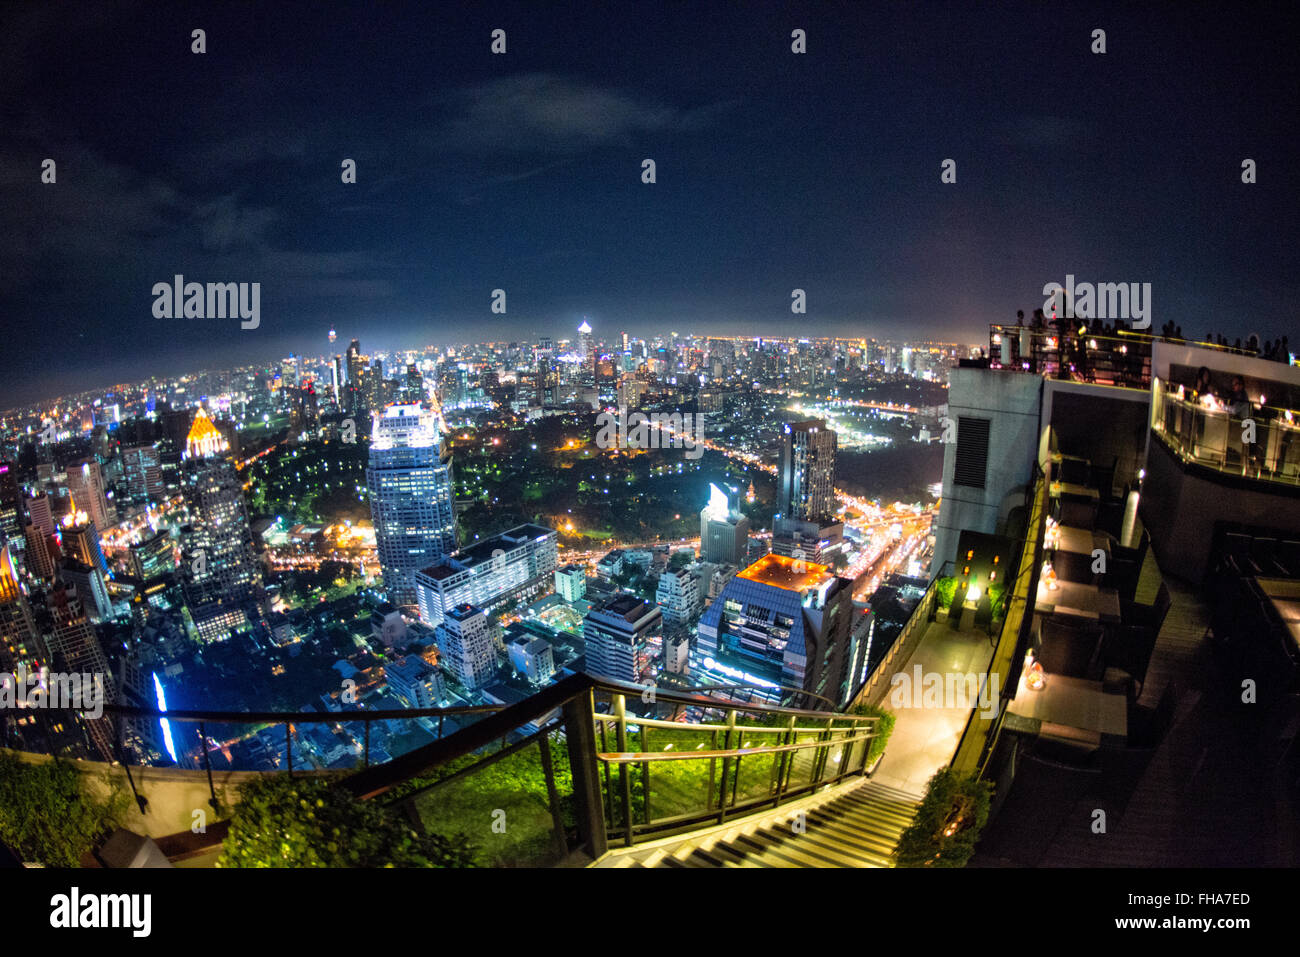 BANGKOK, Thailand - A view of the lights of Bangkok city at night from the Vertigo restaurant on top of the Banyan Tree Hotel. Stock Photo